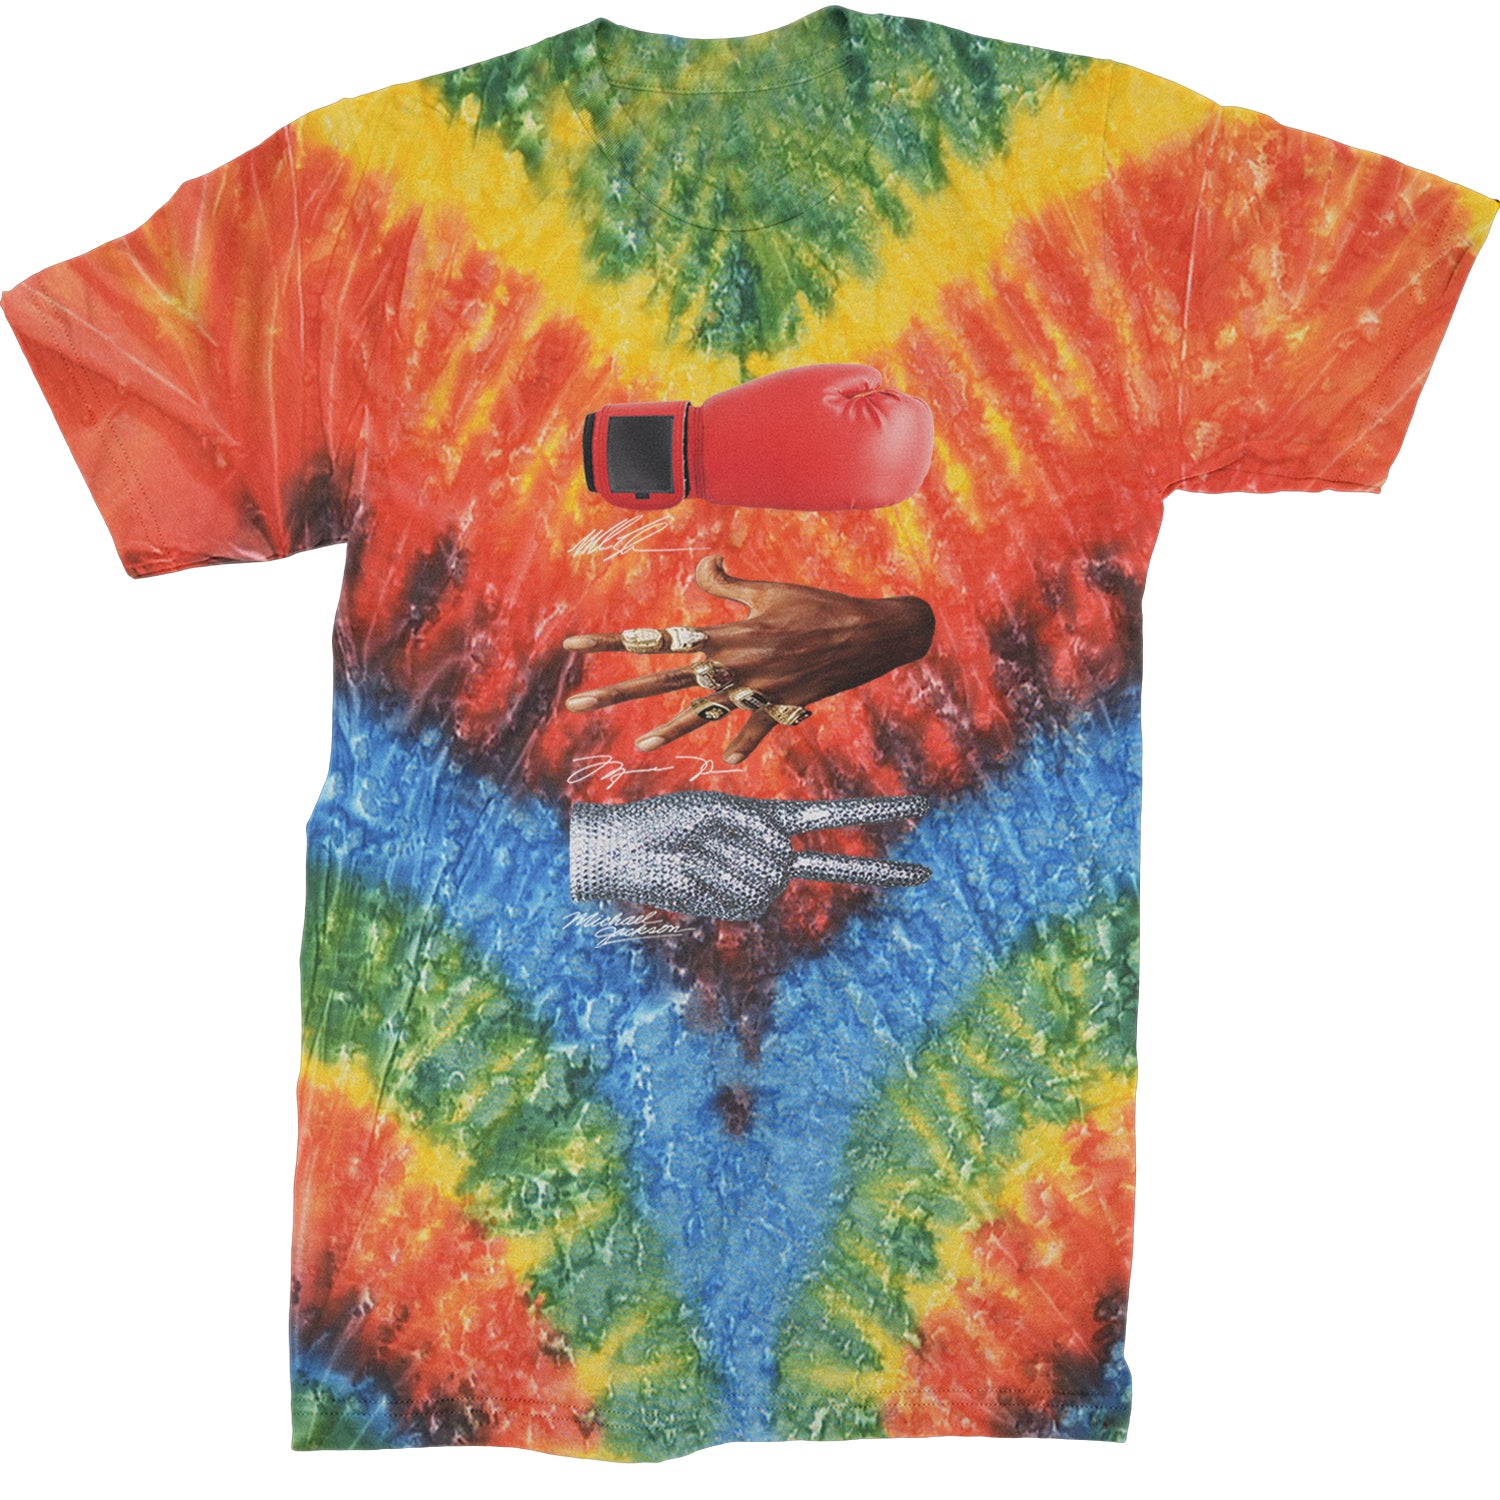 Tyson Jordan Jackson Iconic Michaels Mens T-shirt Tie-Dye Woodstock